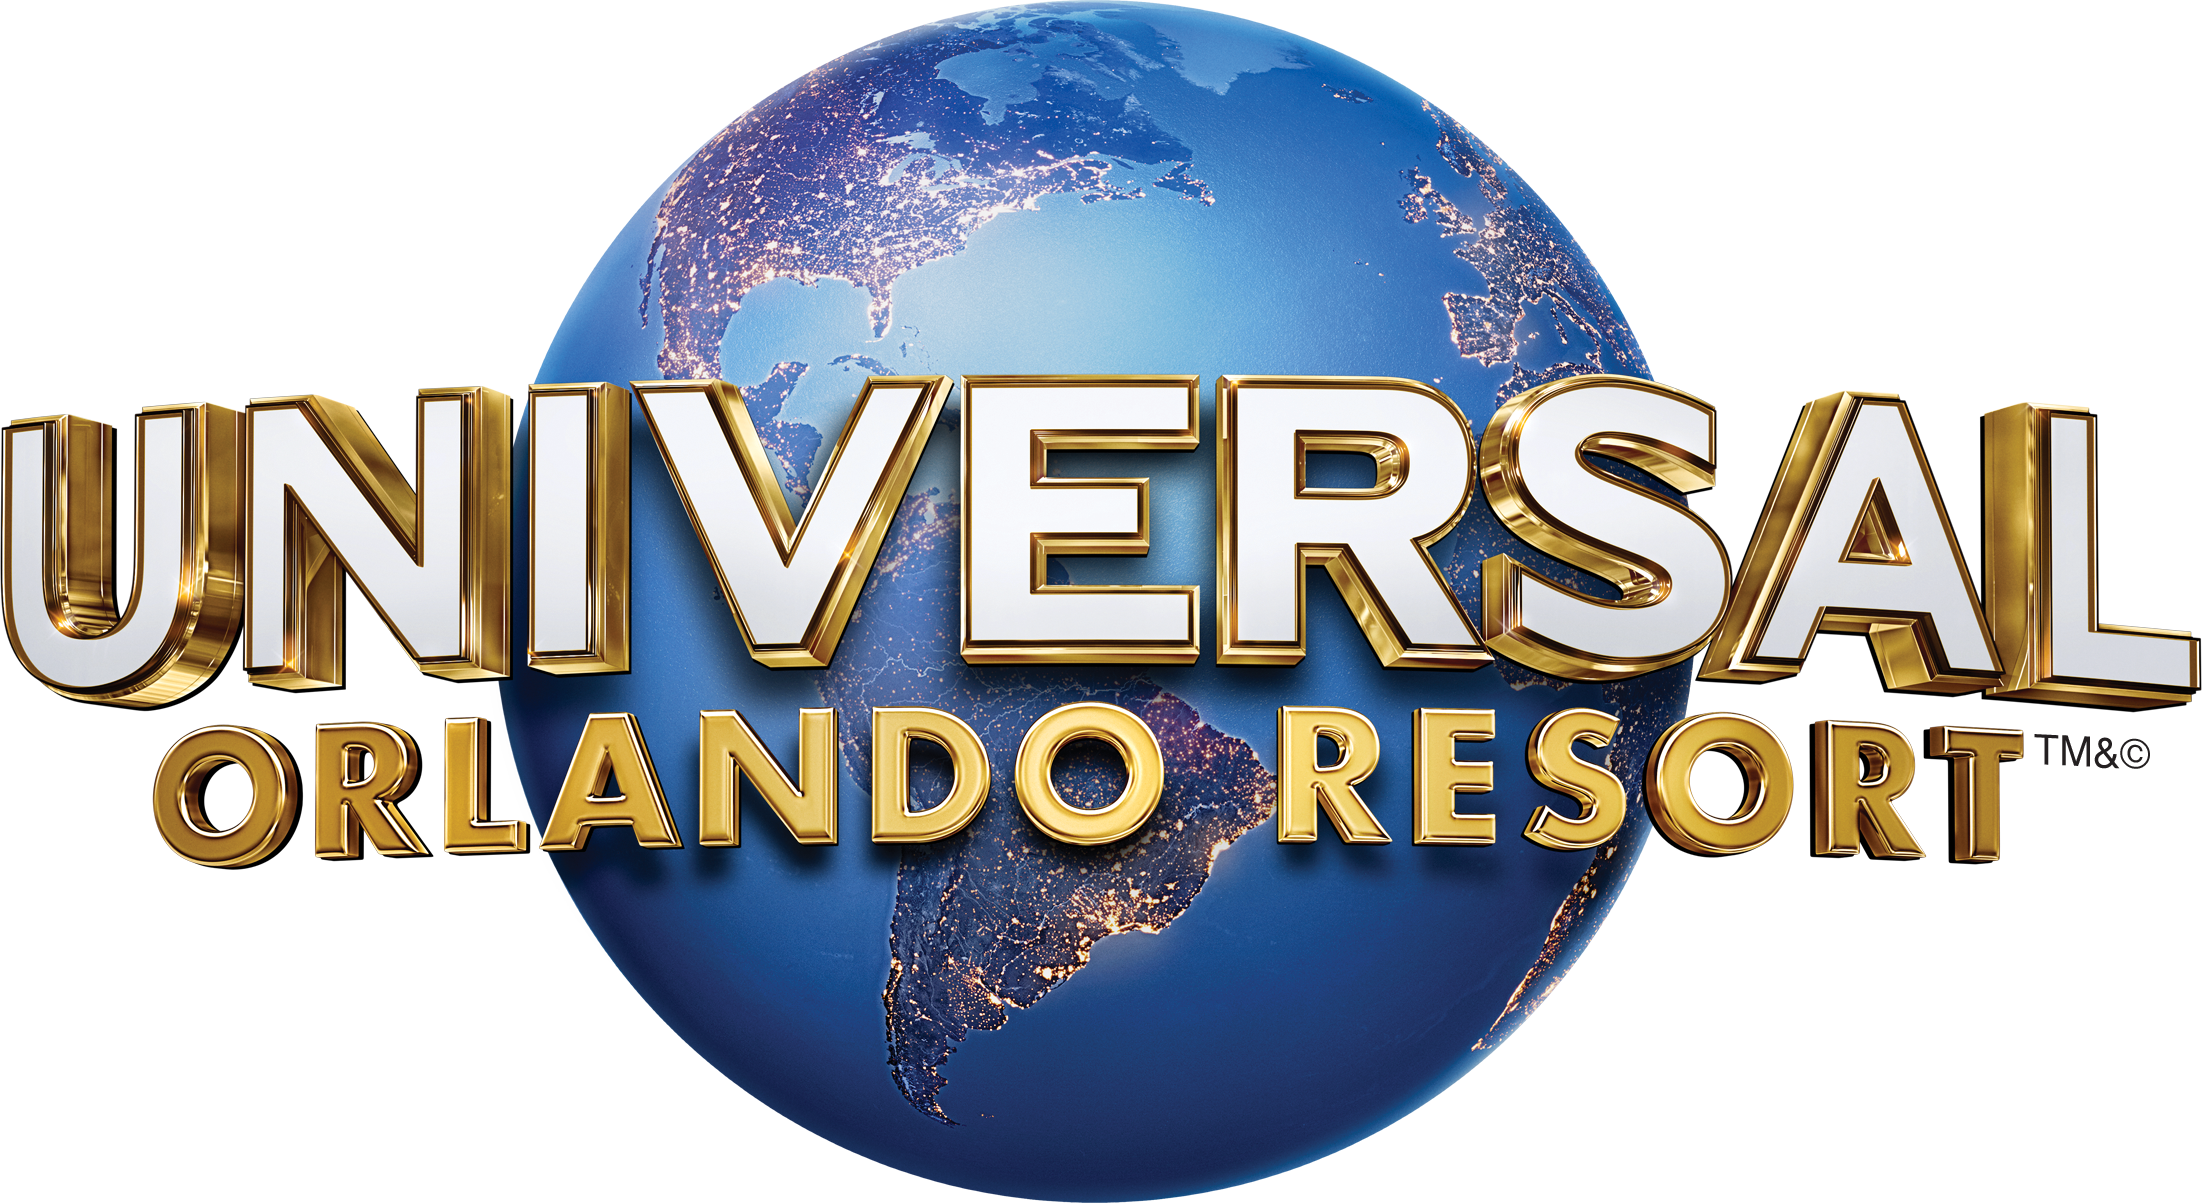 Universal Orlando Resort | Logopedia | Fandom powered by Wikia